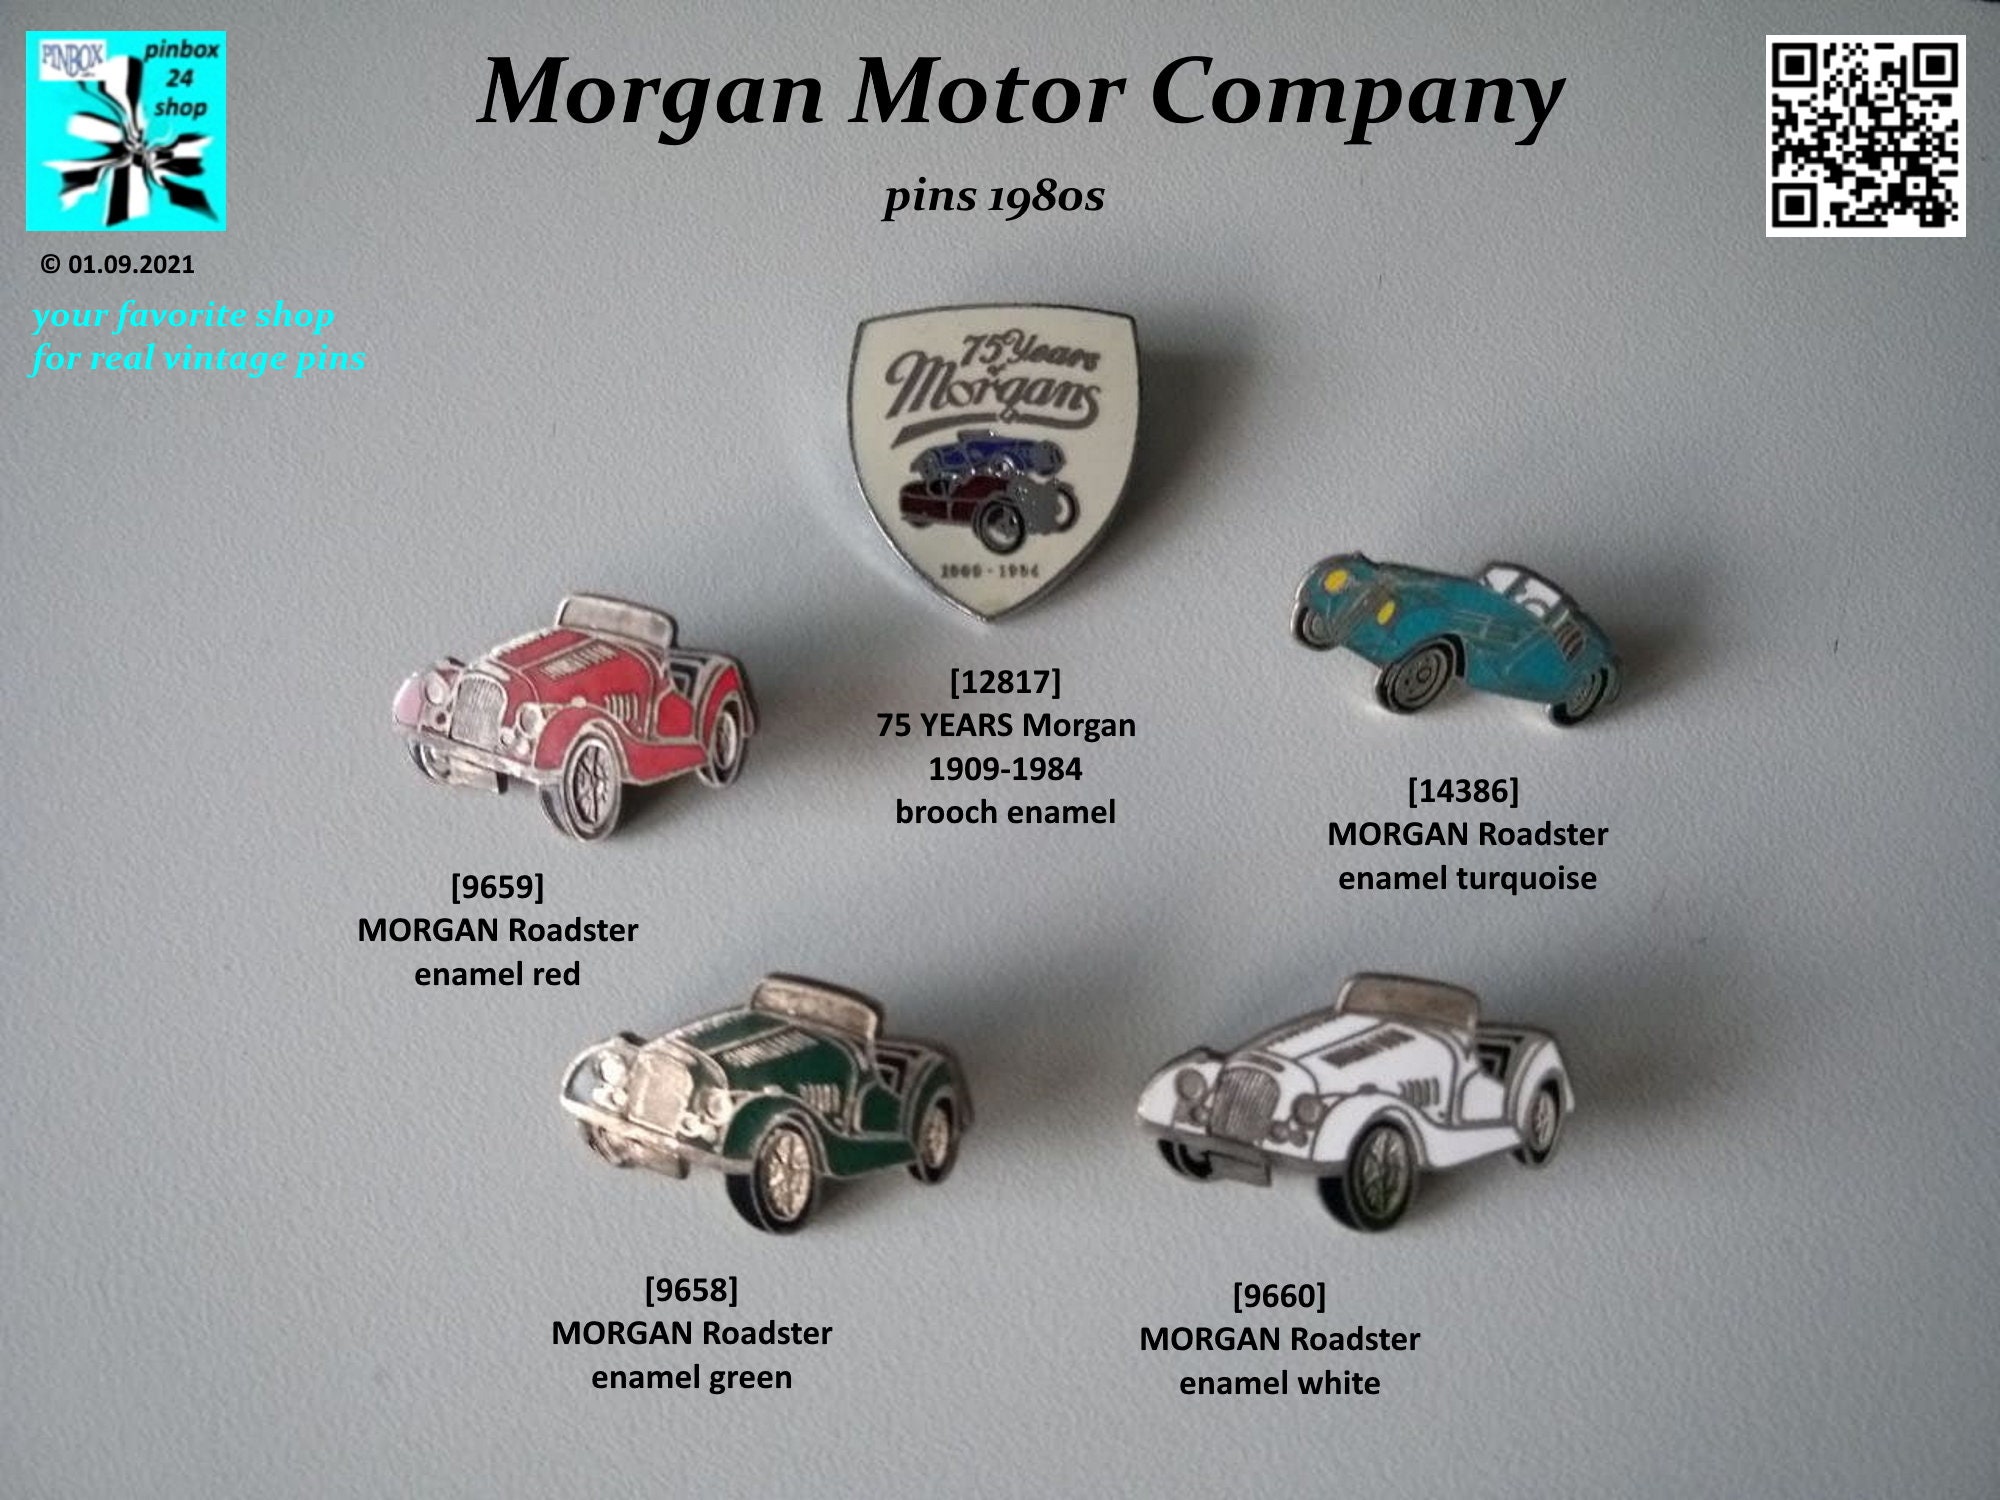 Timeless Classic: Morgan Motor Company Badge, Pins Enamel 1980s